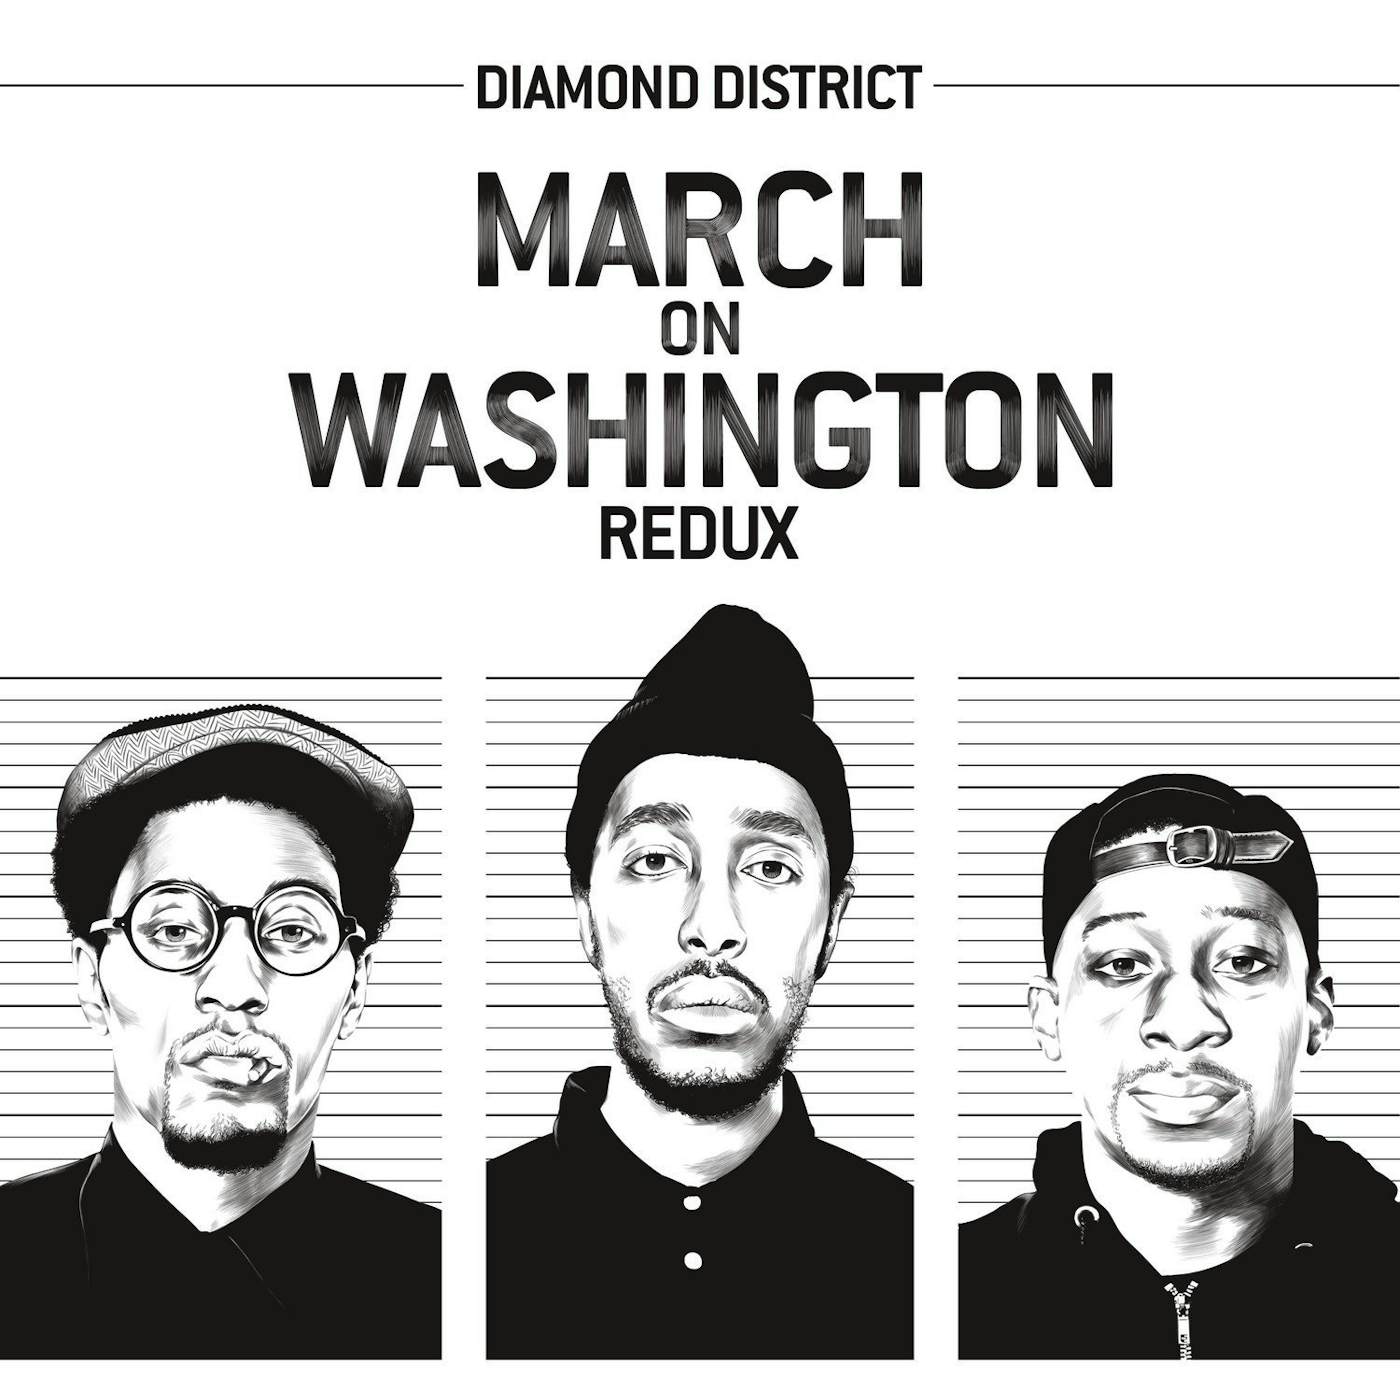 Diamond District March On Washington Redux Vinyl Record